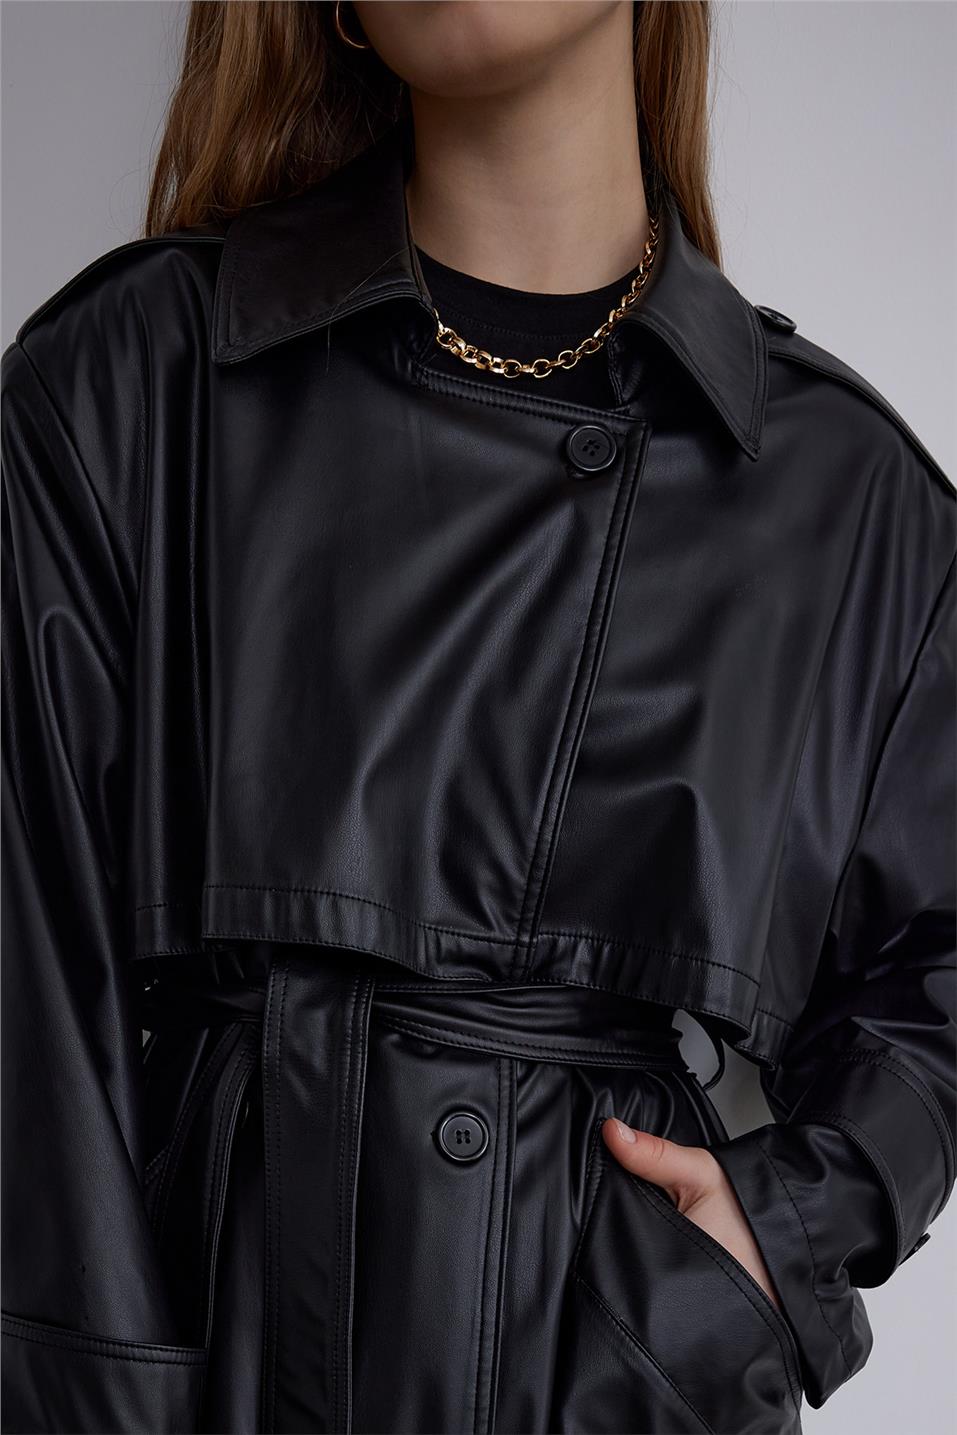 Black Leather Oversize Trench Coat